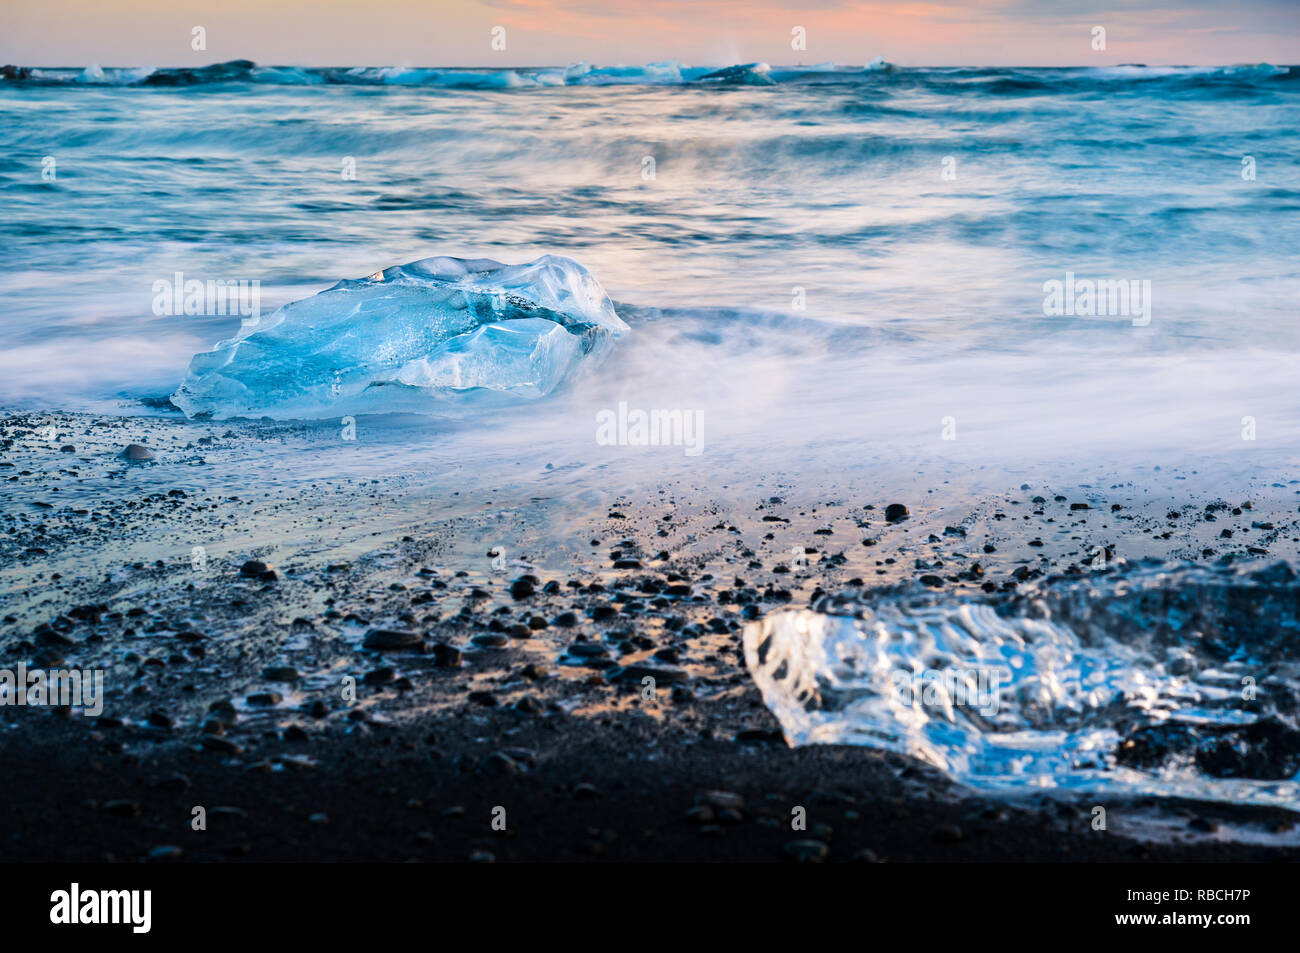 Wave splashing ice on Diamond beach in Iceland during sunset Stock Photo